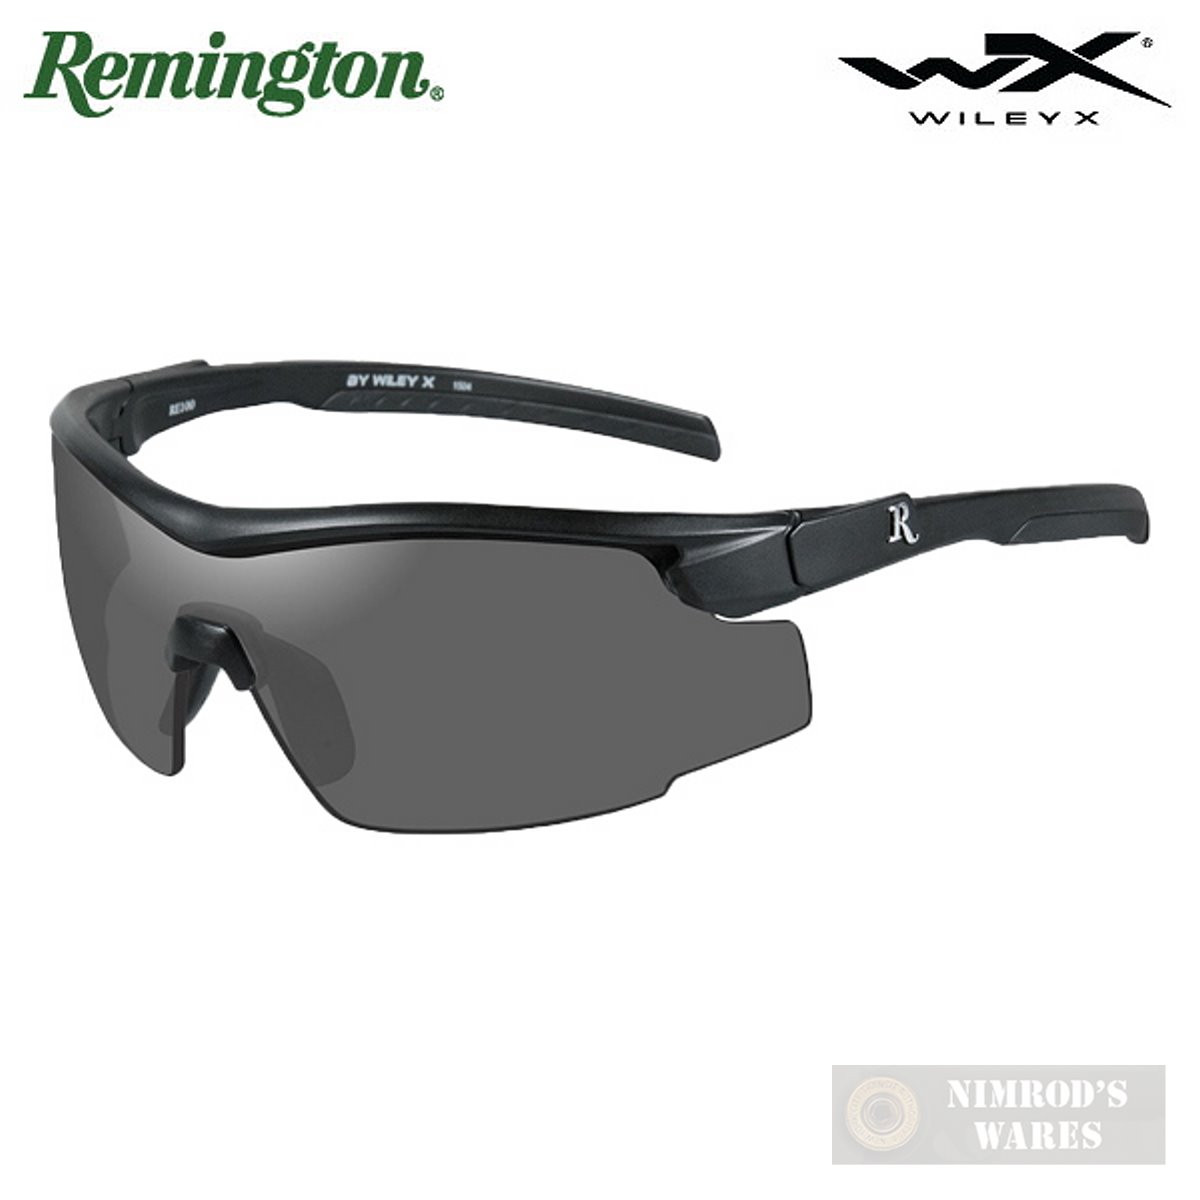 Remington Wiley X Shooting GLASSES Ballistic SMOKE Adult RE100 ...